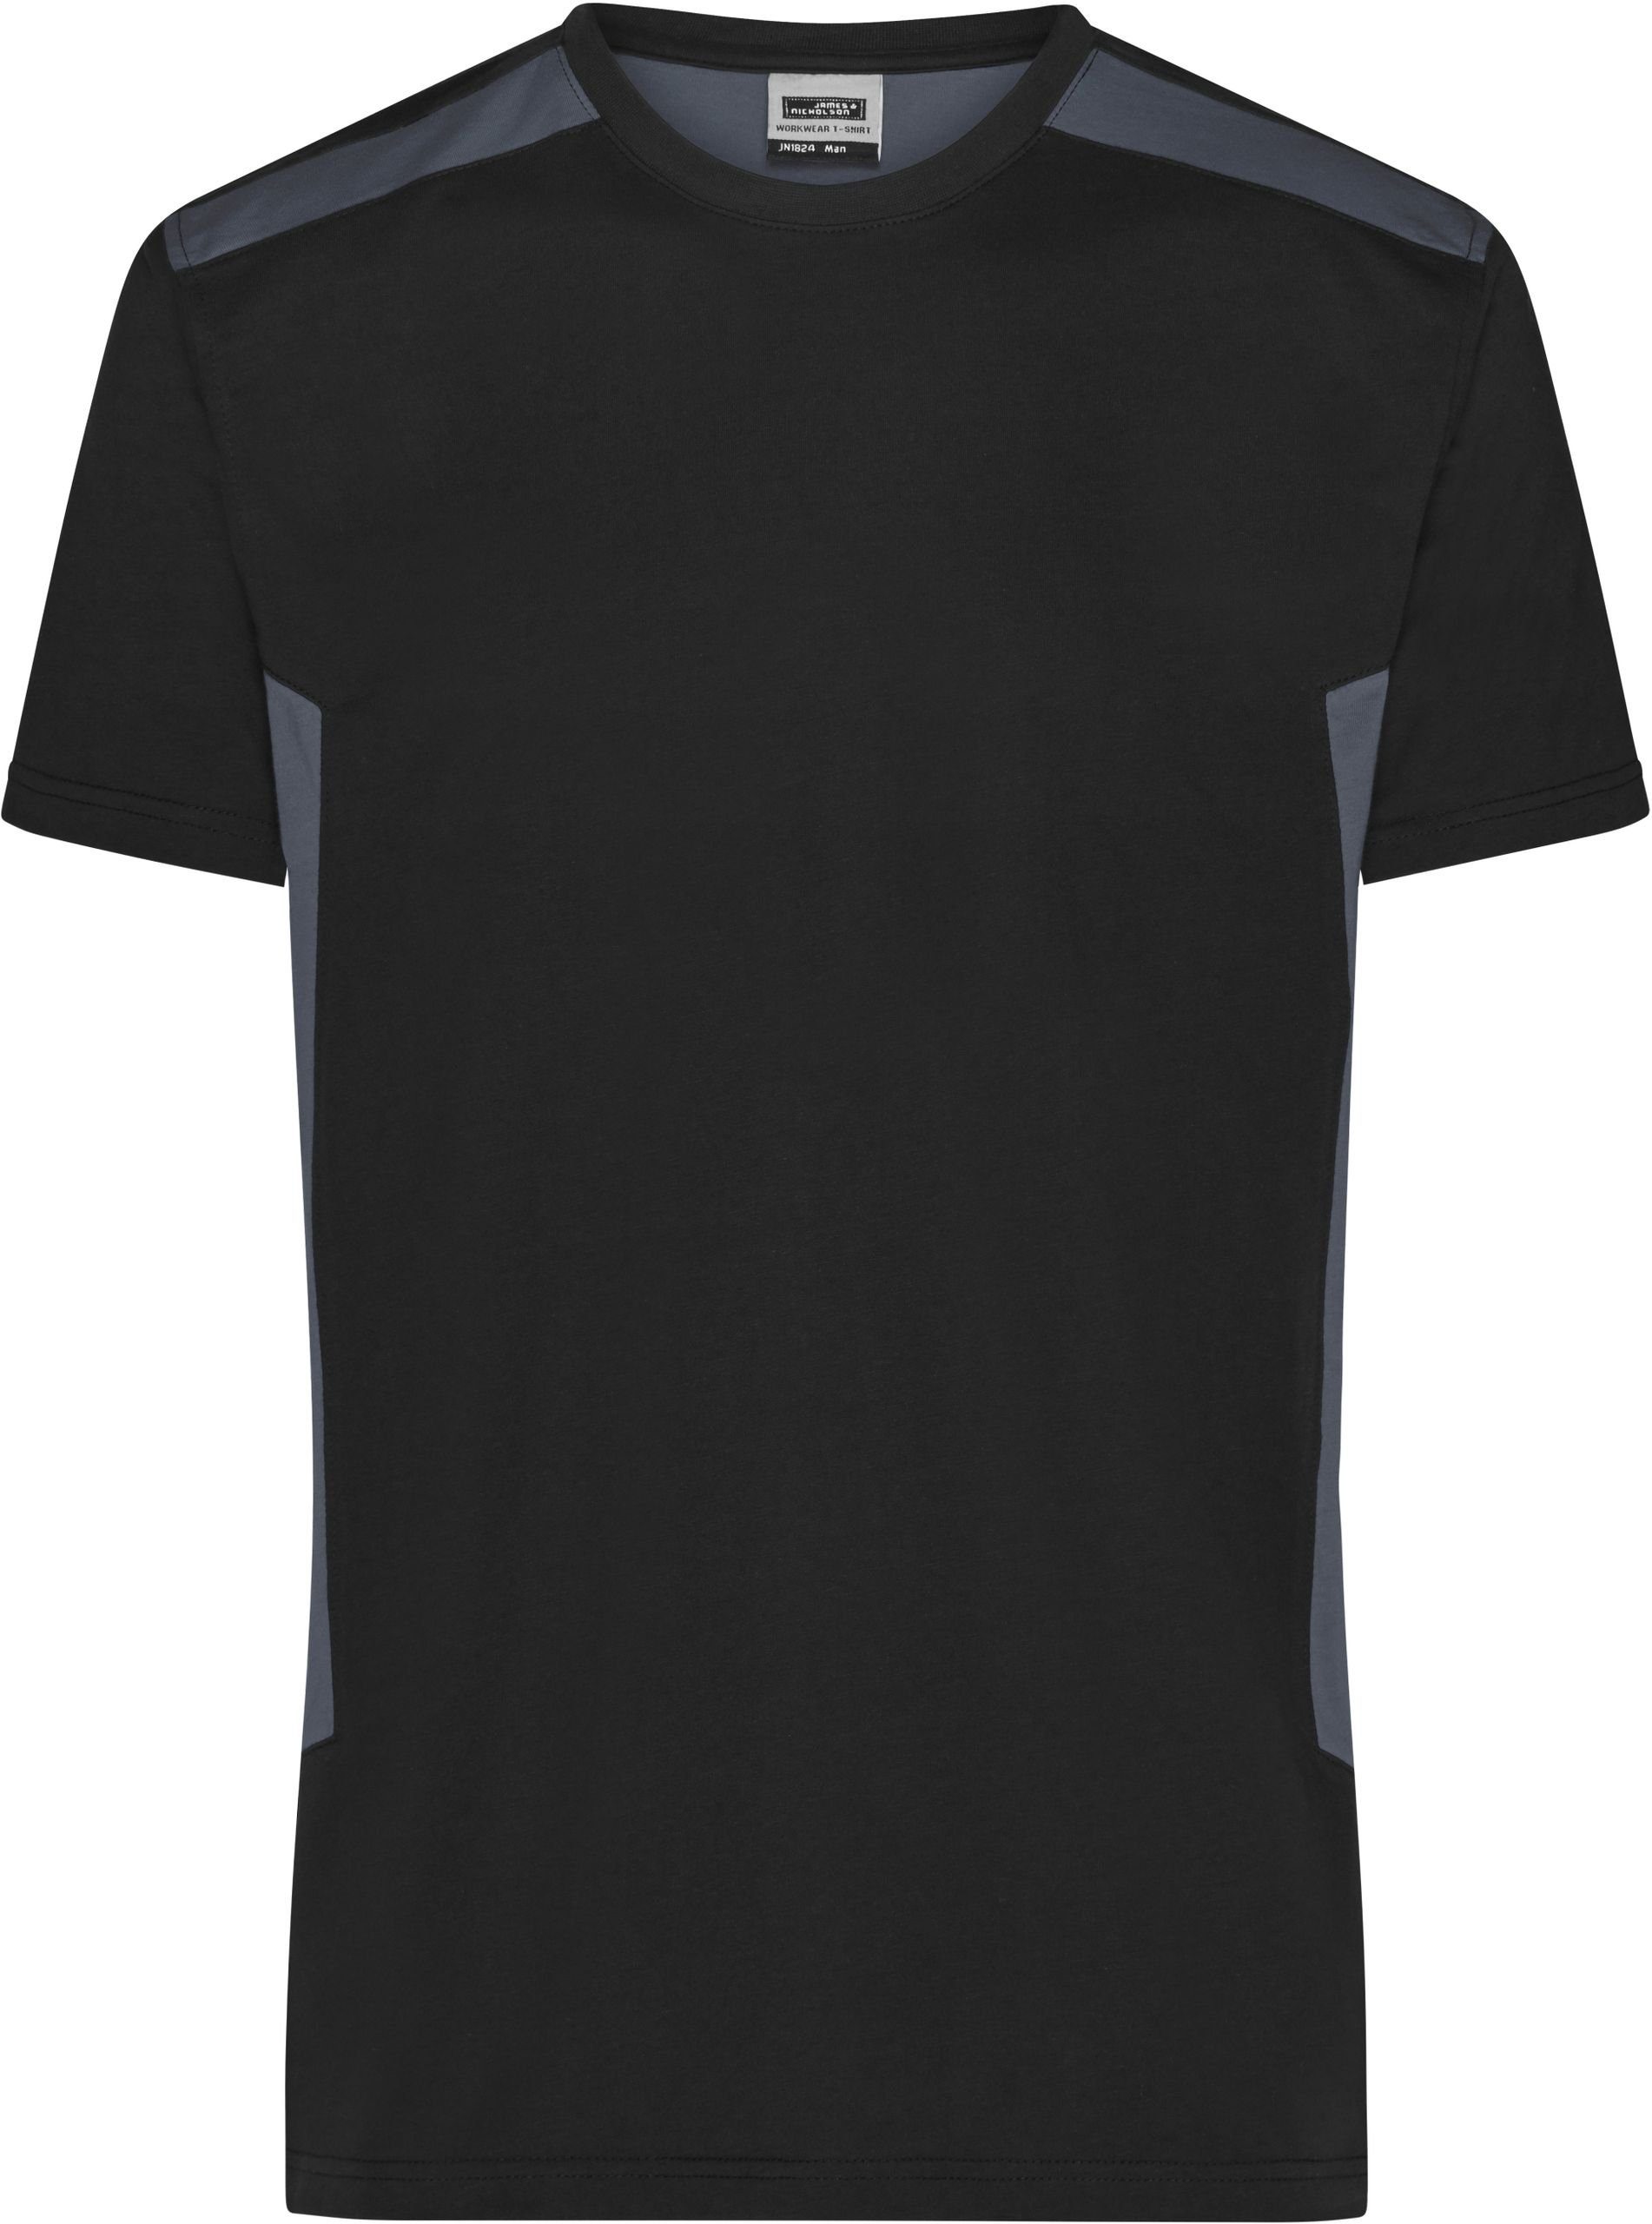 & - T-Shirt T-Shirt Strong black/carbon James Nicholson Workwear Herren